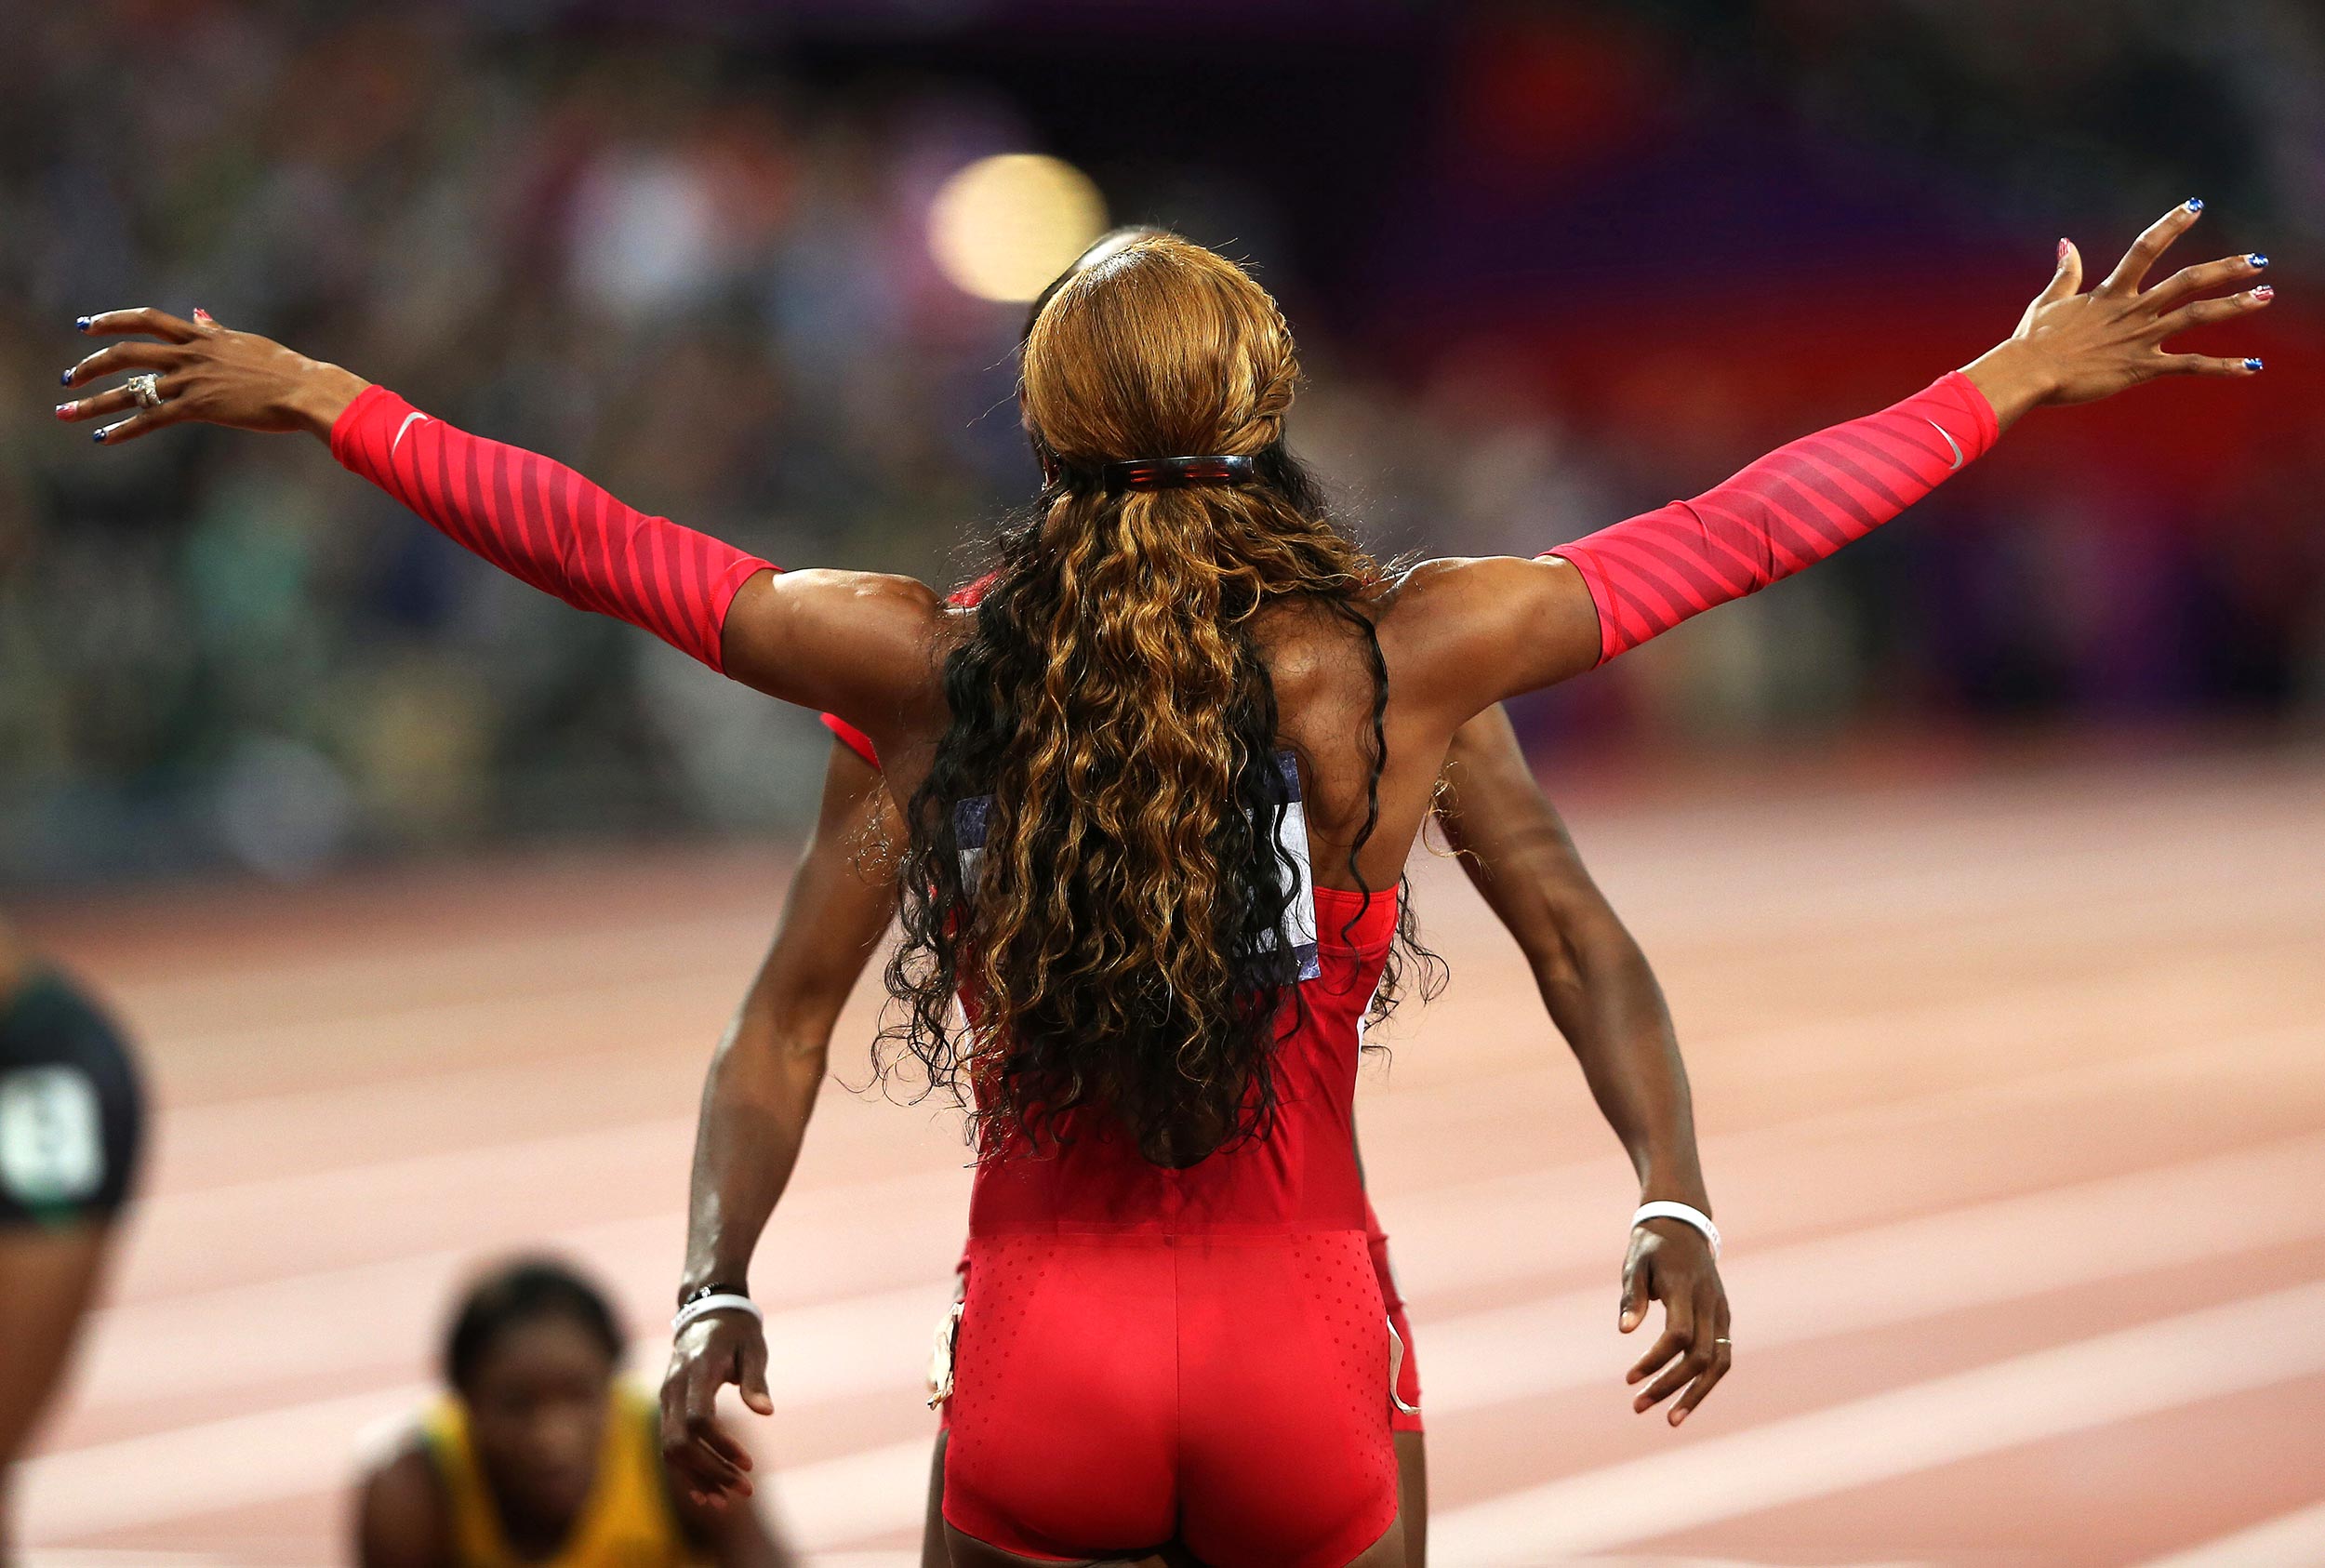   London Olympics 2012 - Athletics - Women